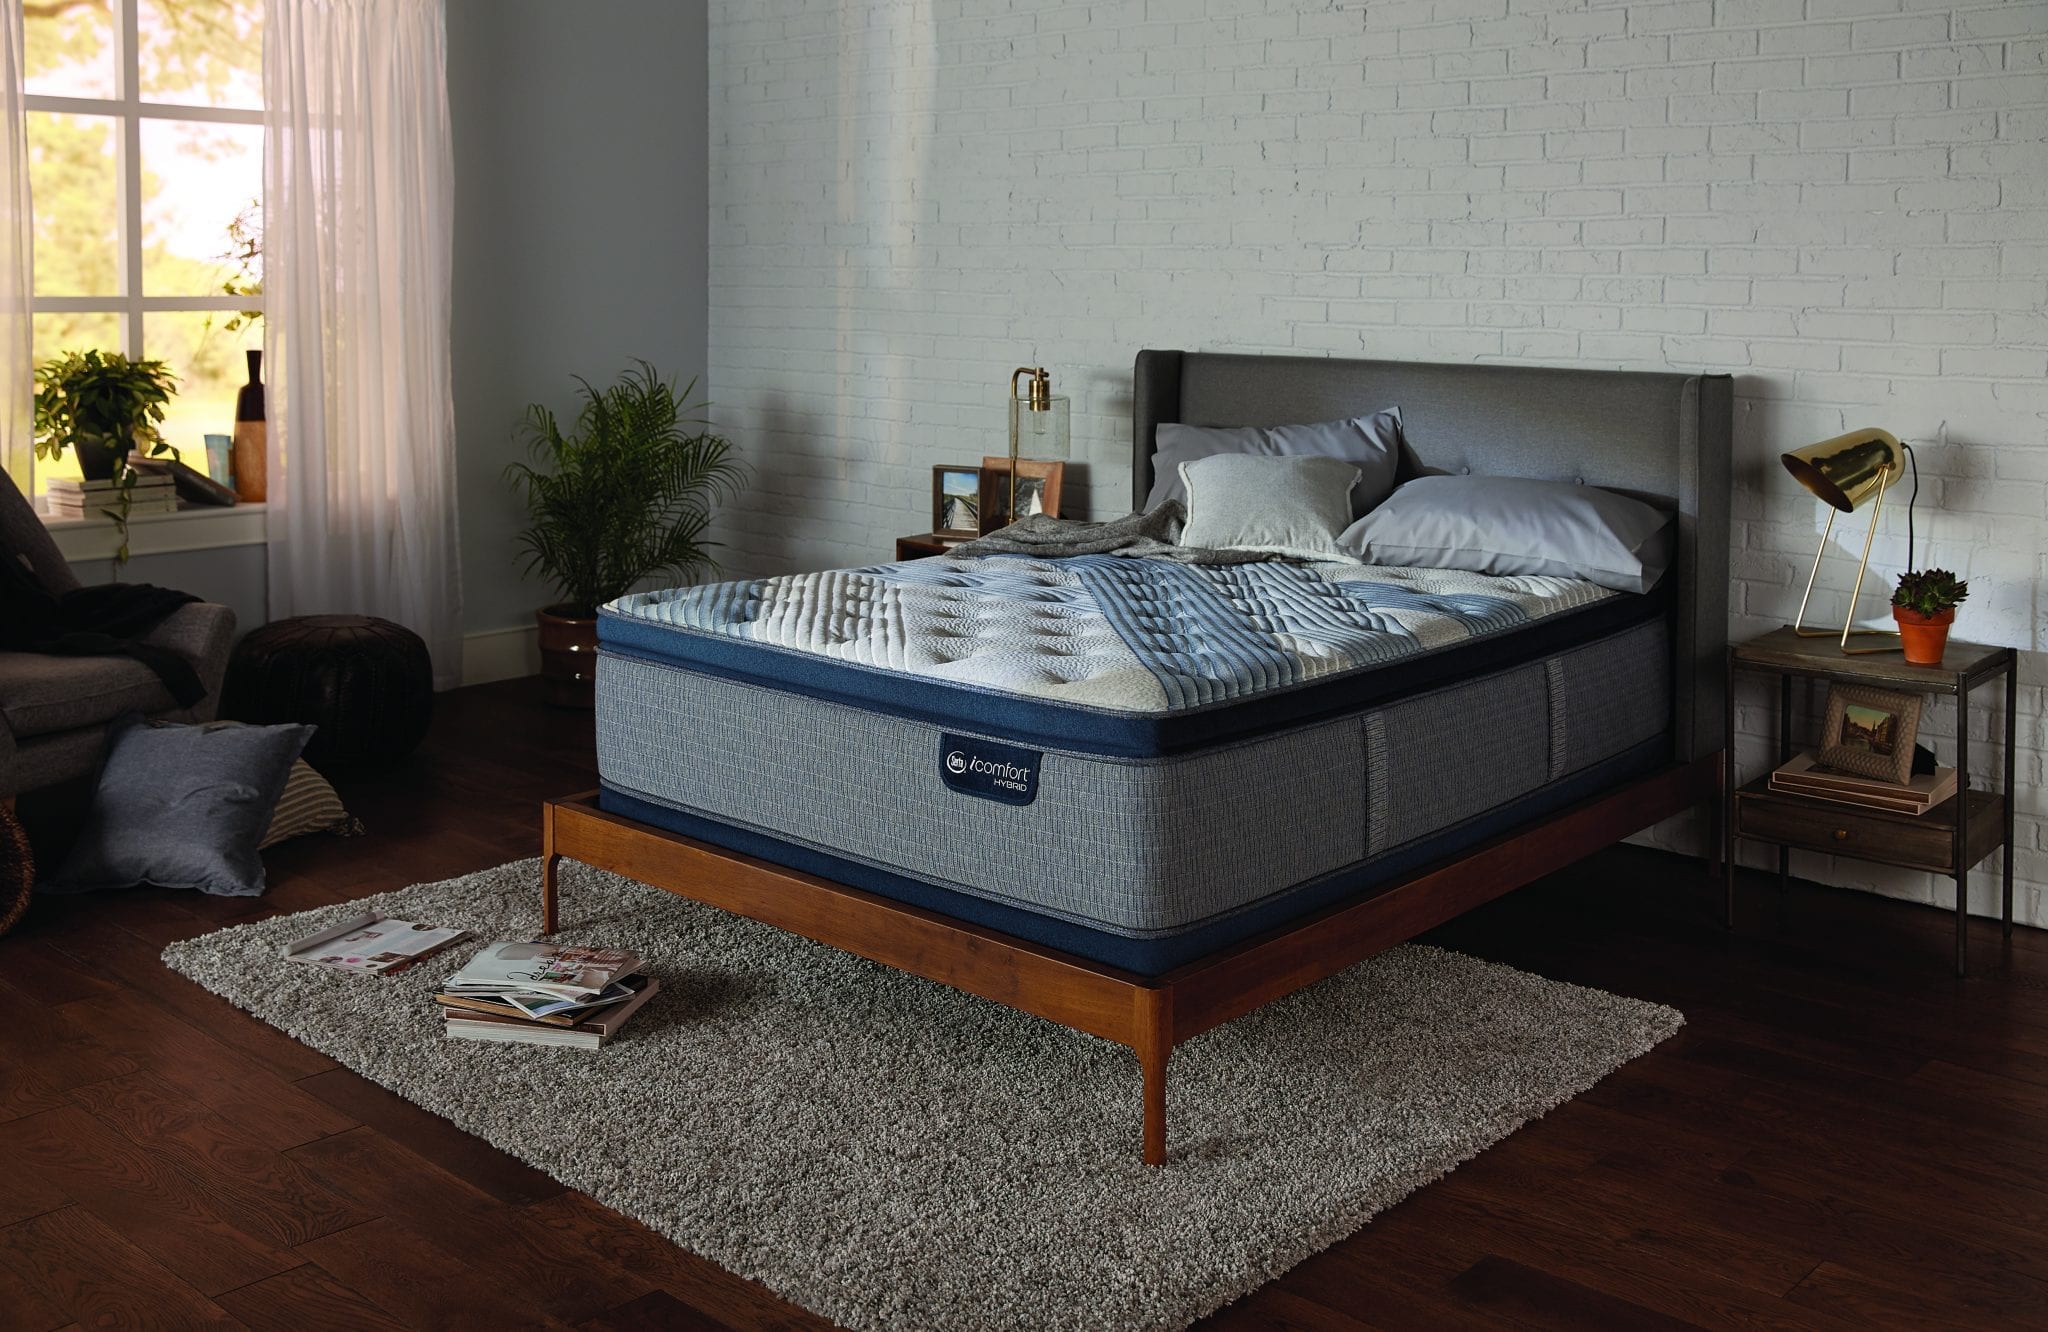 icomfort 700 hybrid mattress